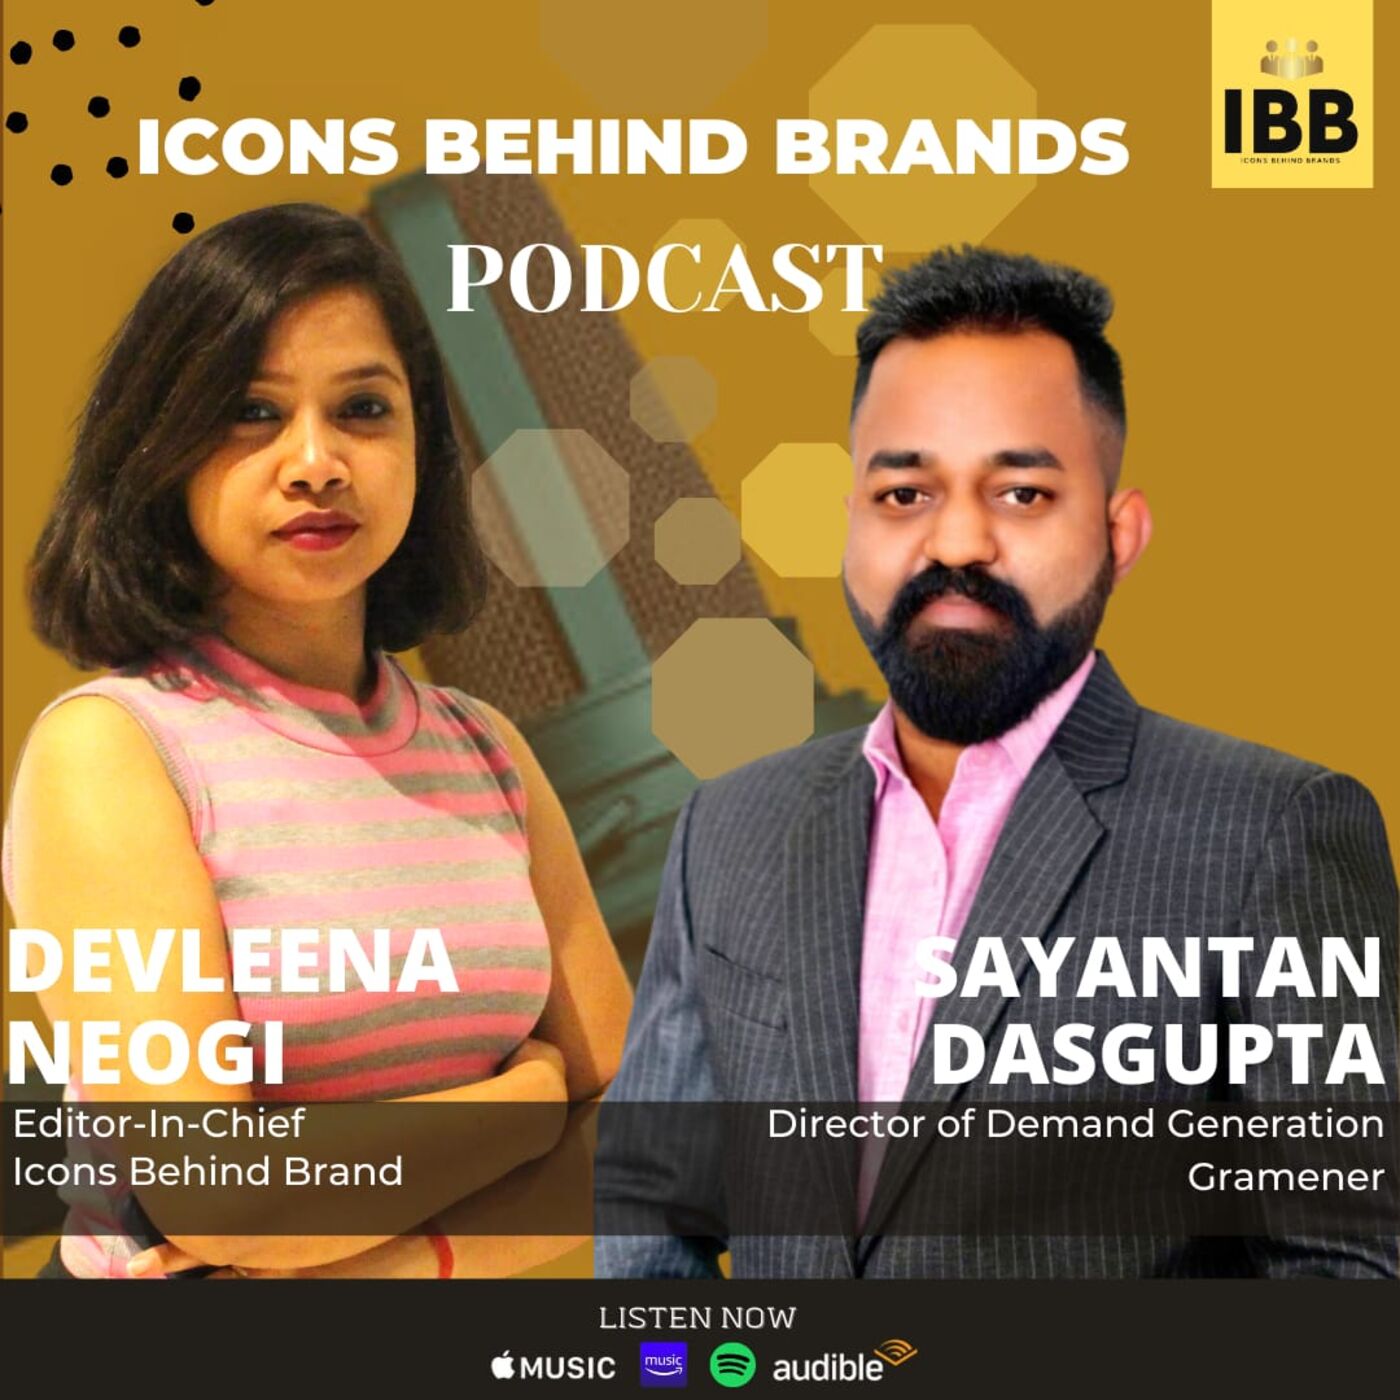 A Talk On Demand Generation| Sayantan Dasgupta | Marketing And Demand Generation Leader| IBB